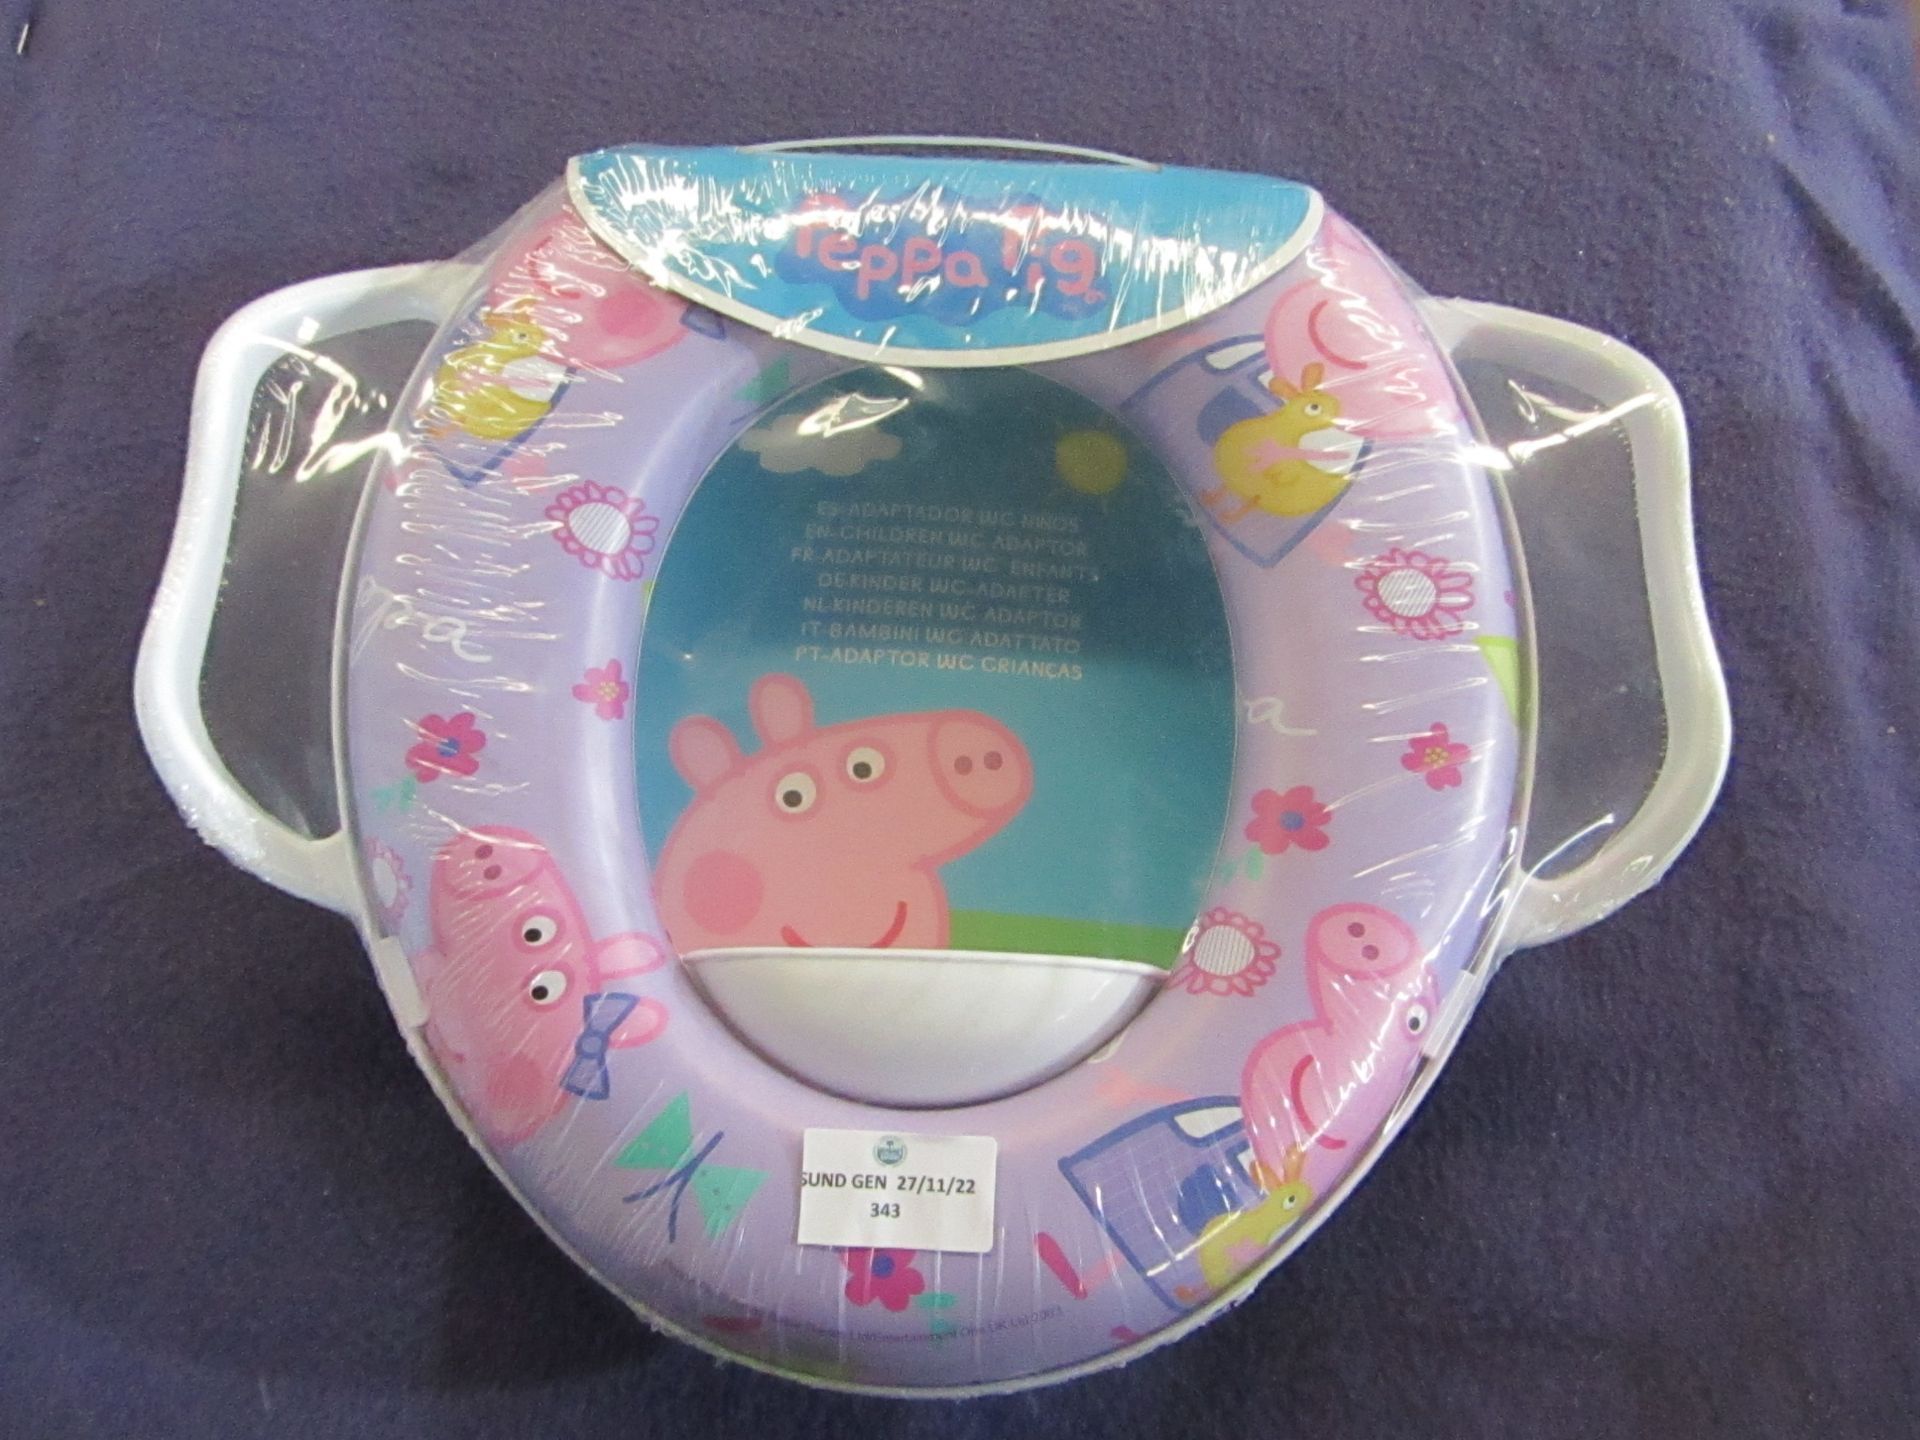 Peppa Pig - Children's WC Adapter Seat ( Girls ) - Unused & Packaged.